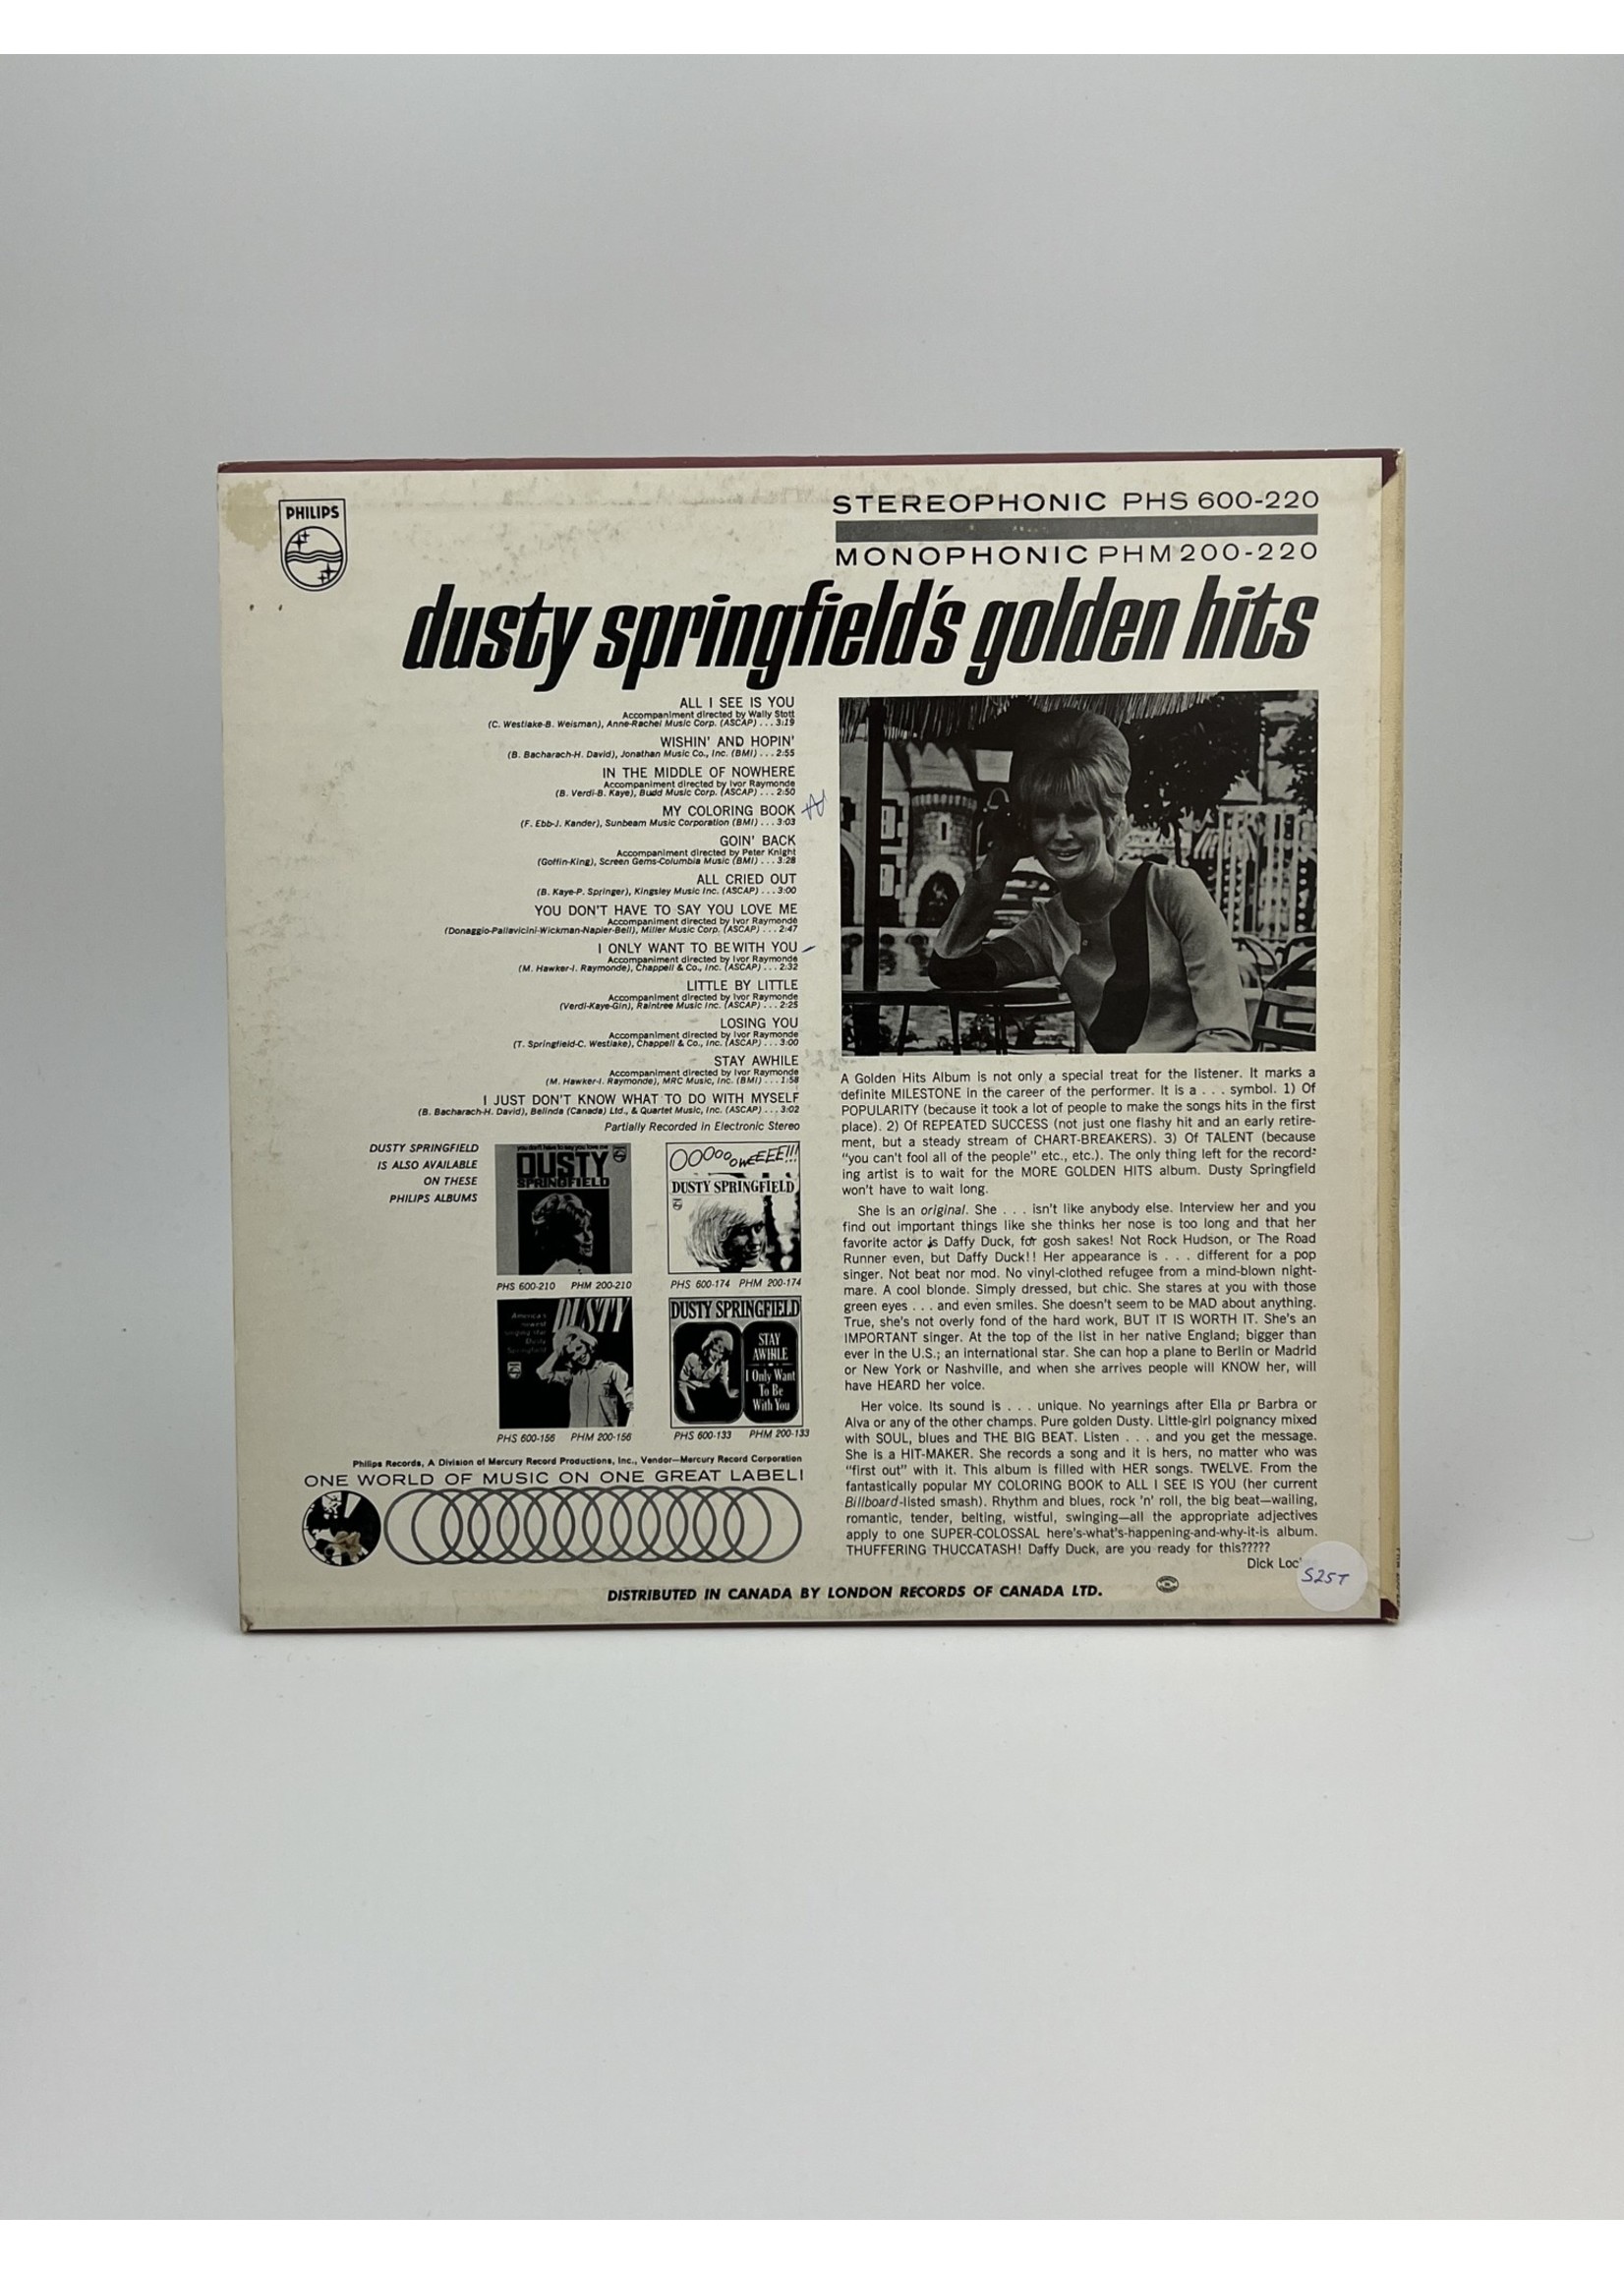 LP Dusty Springfield Golden Hits LP Record